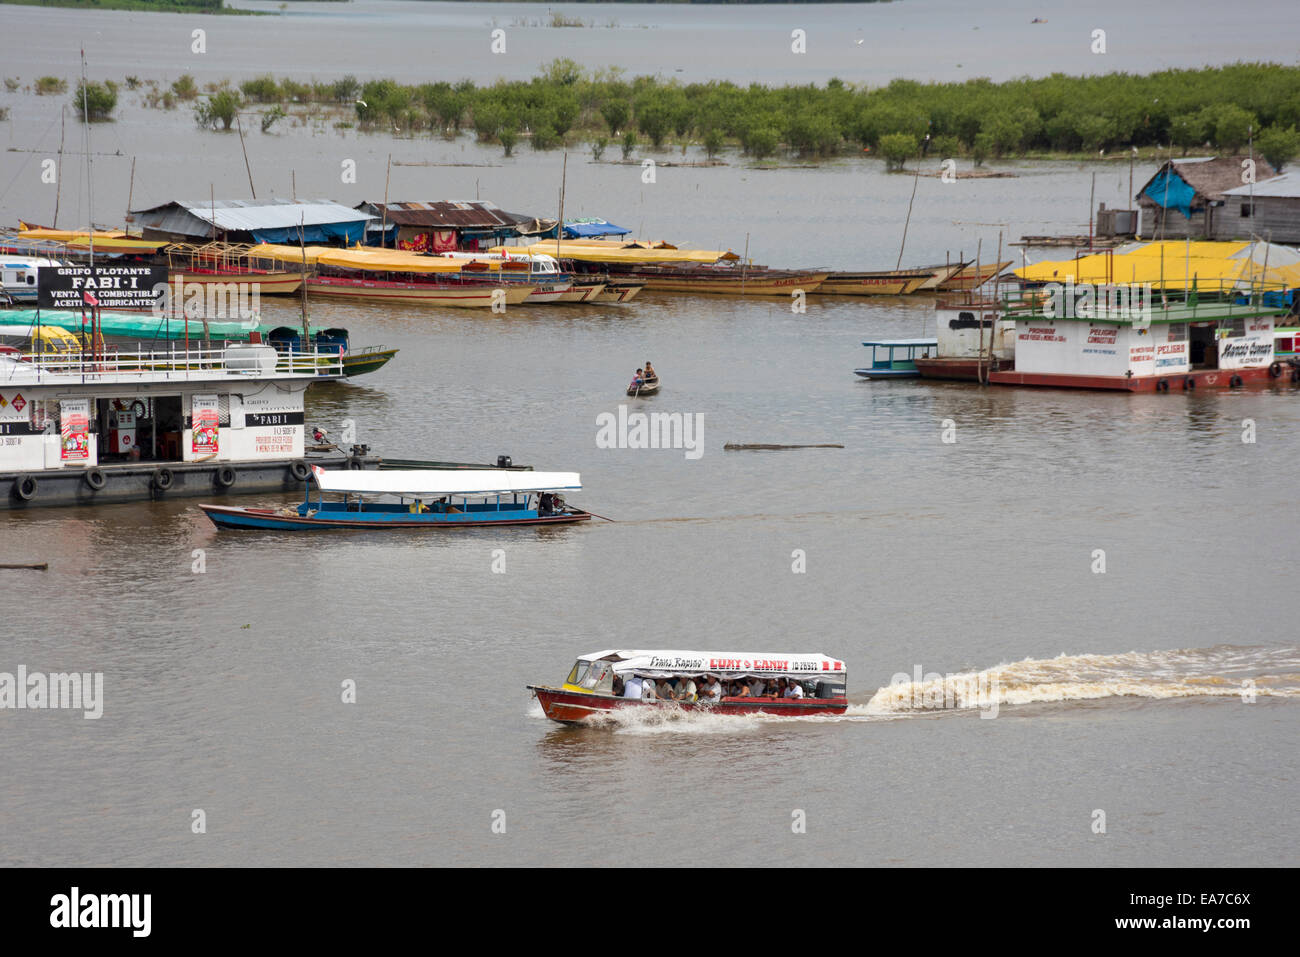 Collectivo speed boat leaving port 'Mercado de los Productores' on the Itaya River, Amazon, Iquitos, Peru Stock Photo